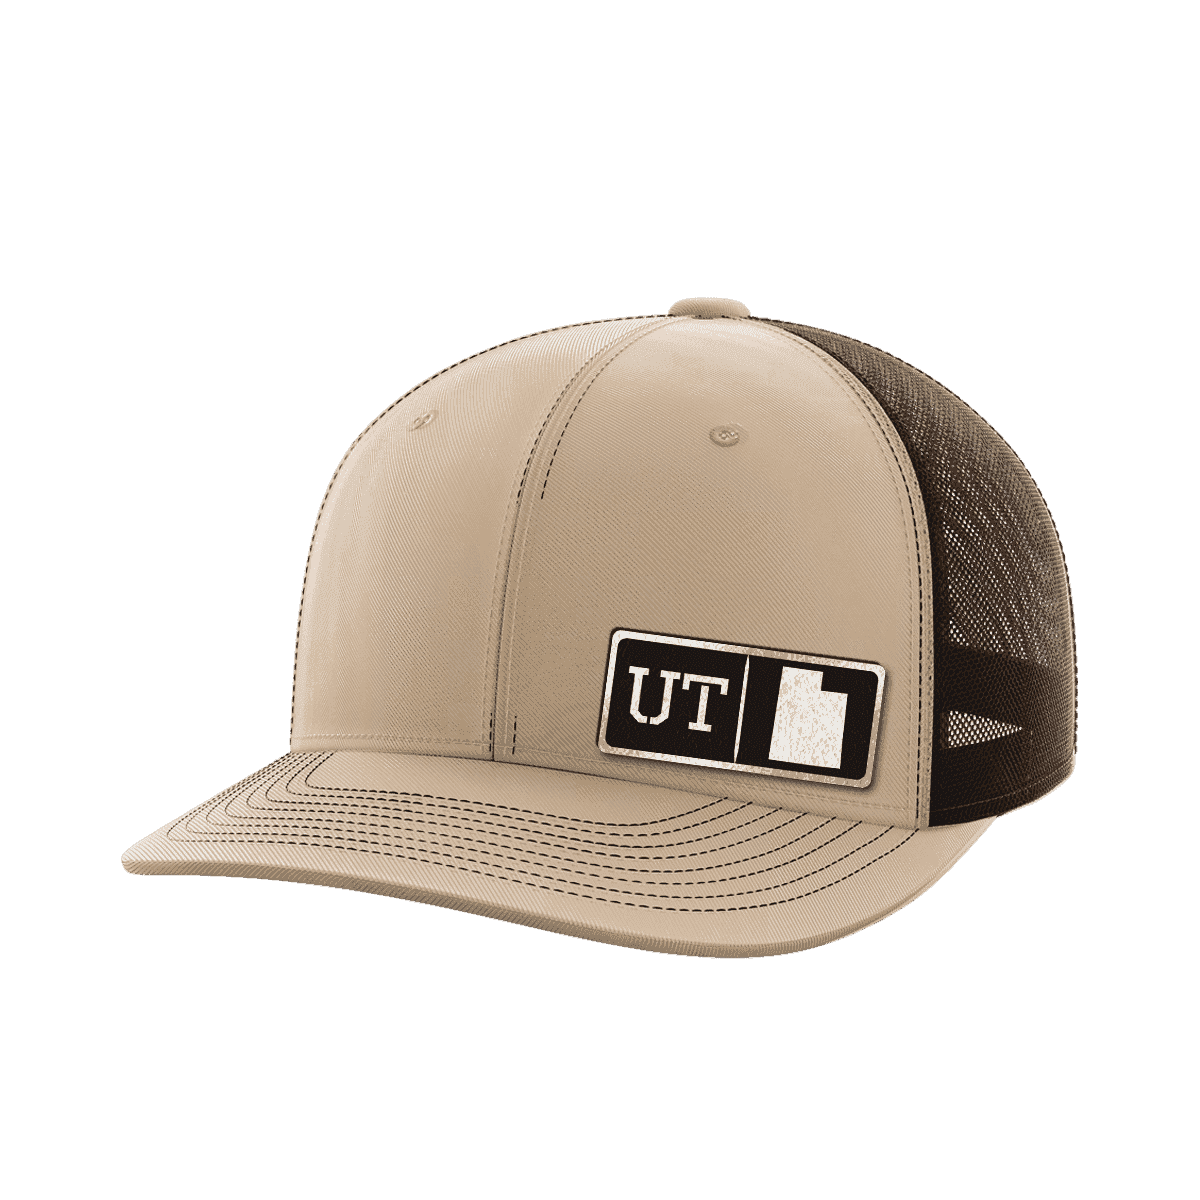 Thumbnail for Utah Homegrown Hats - Greater Half